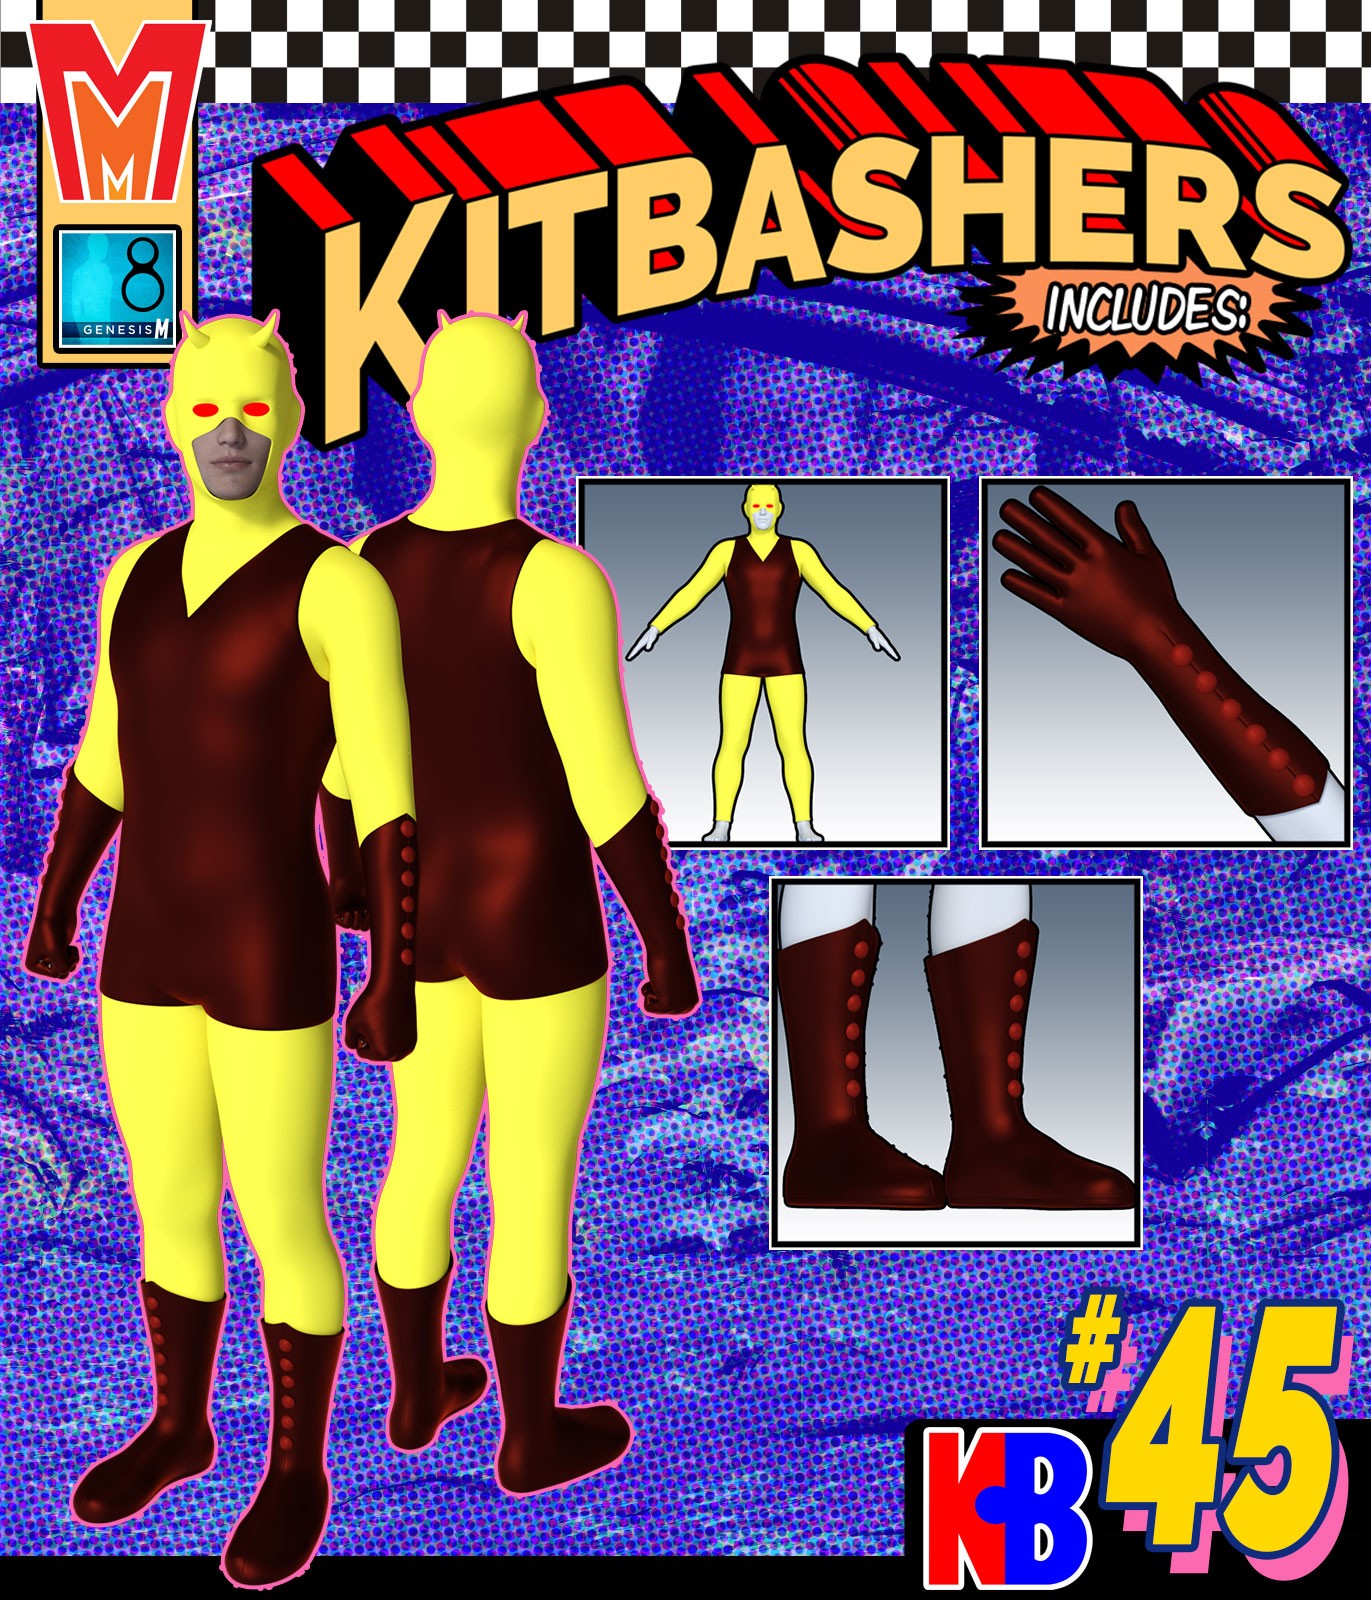 Kitbashers 045 MMG8M by: MightyMite, 3D Models by Daz 3D